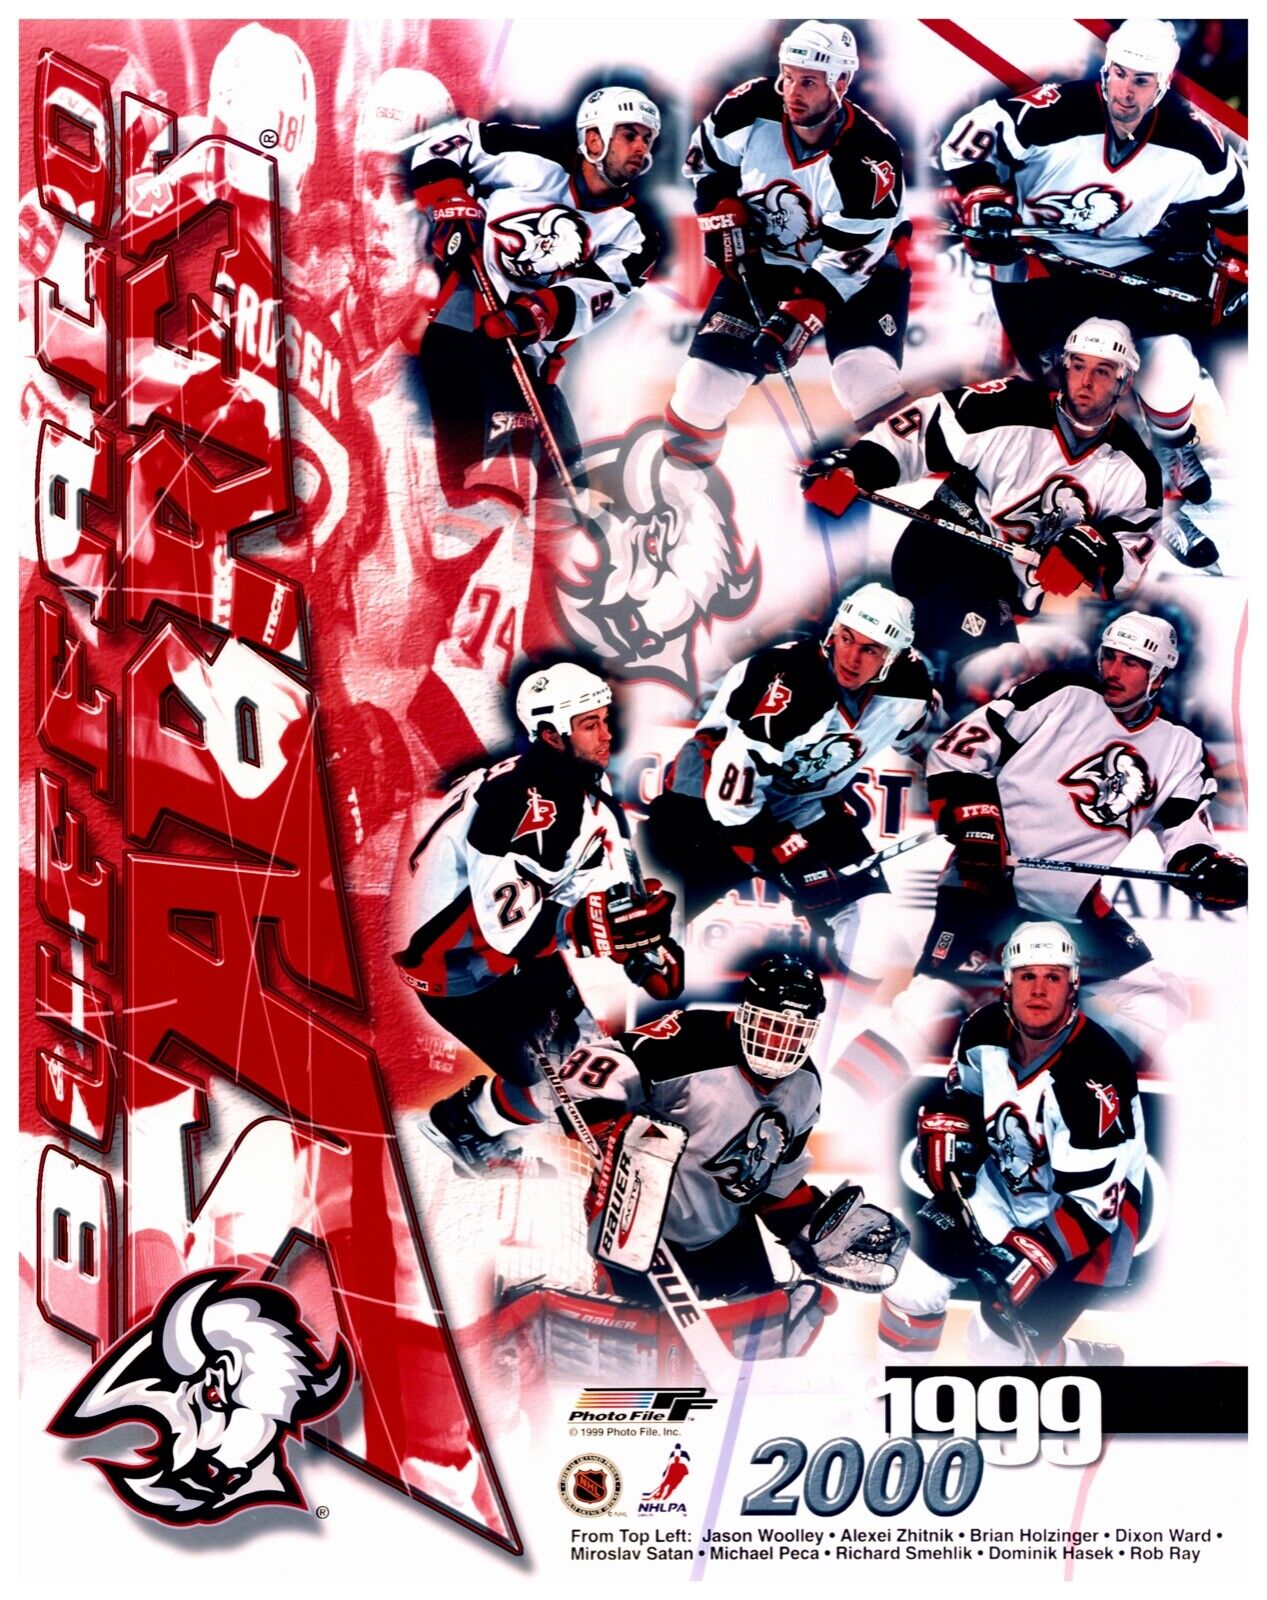 1999 / 2000 Buffalo Sabres Unsigned Photofile 8x10 NHL Photo Dominik Hasek